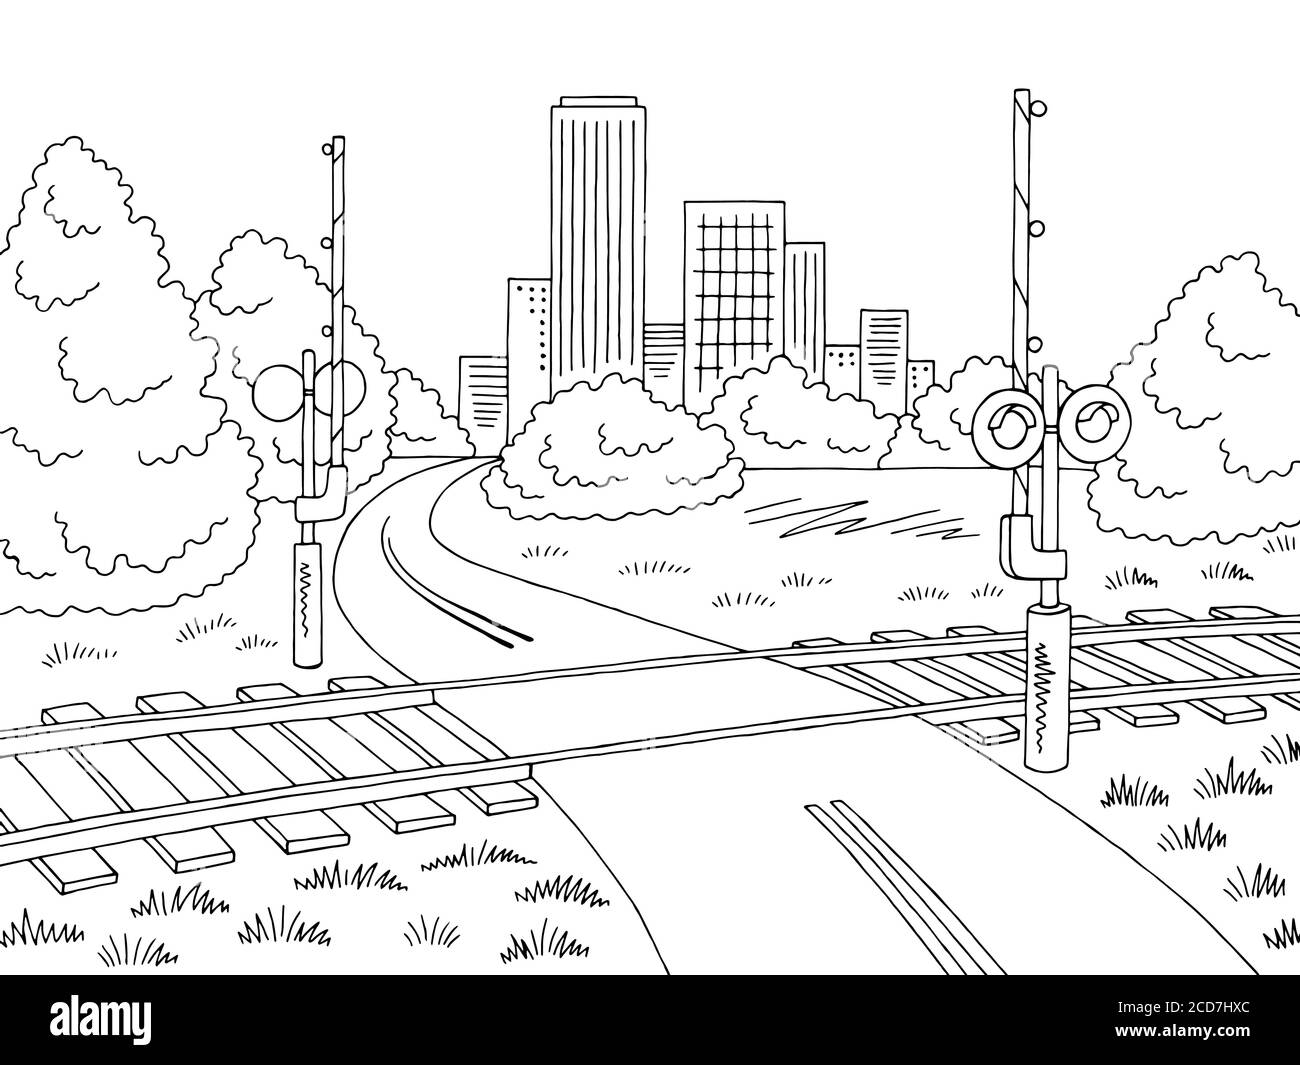 Railroad crossing road graphic black white city landscape sketch illustration vector stock vector image art